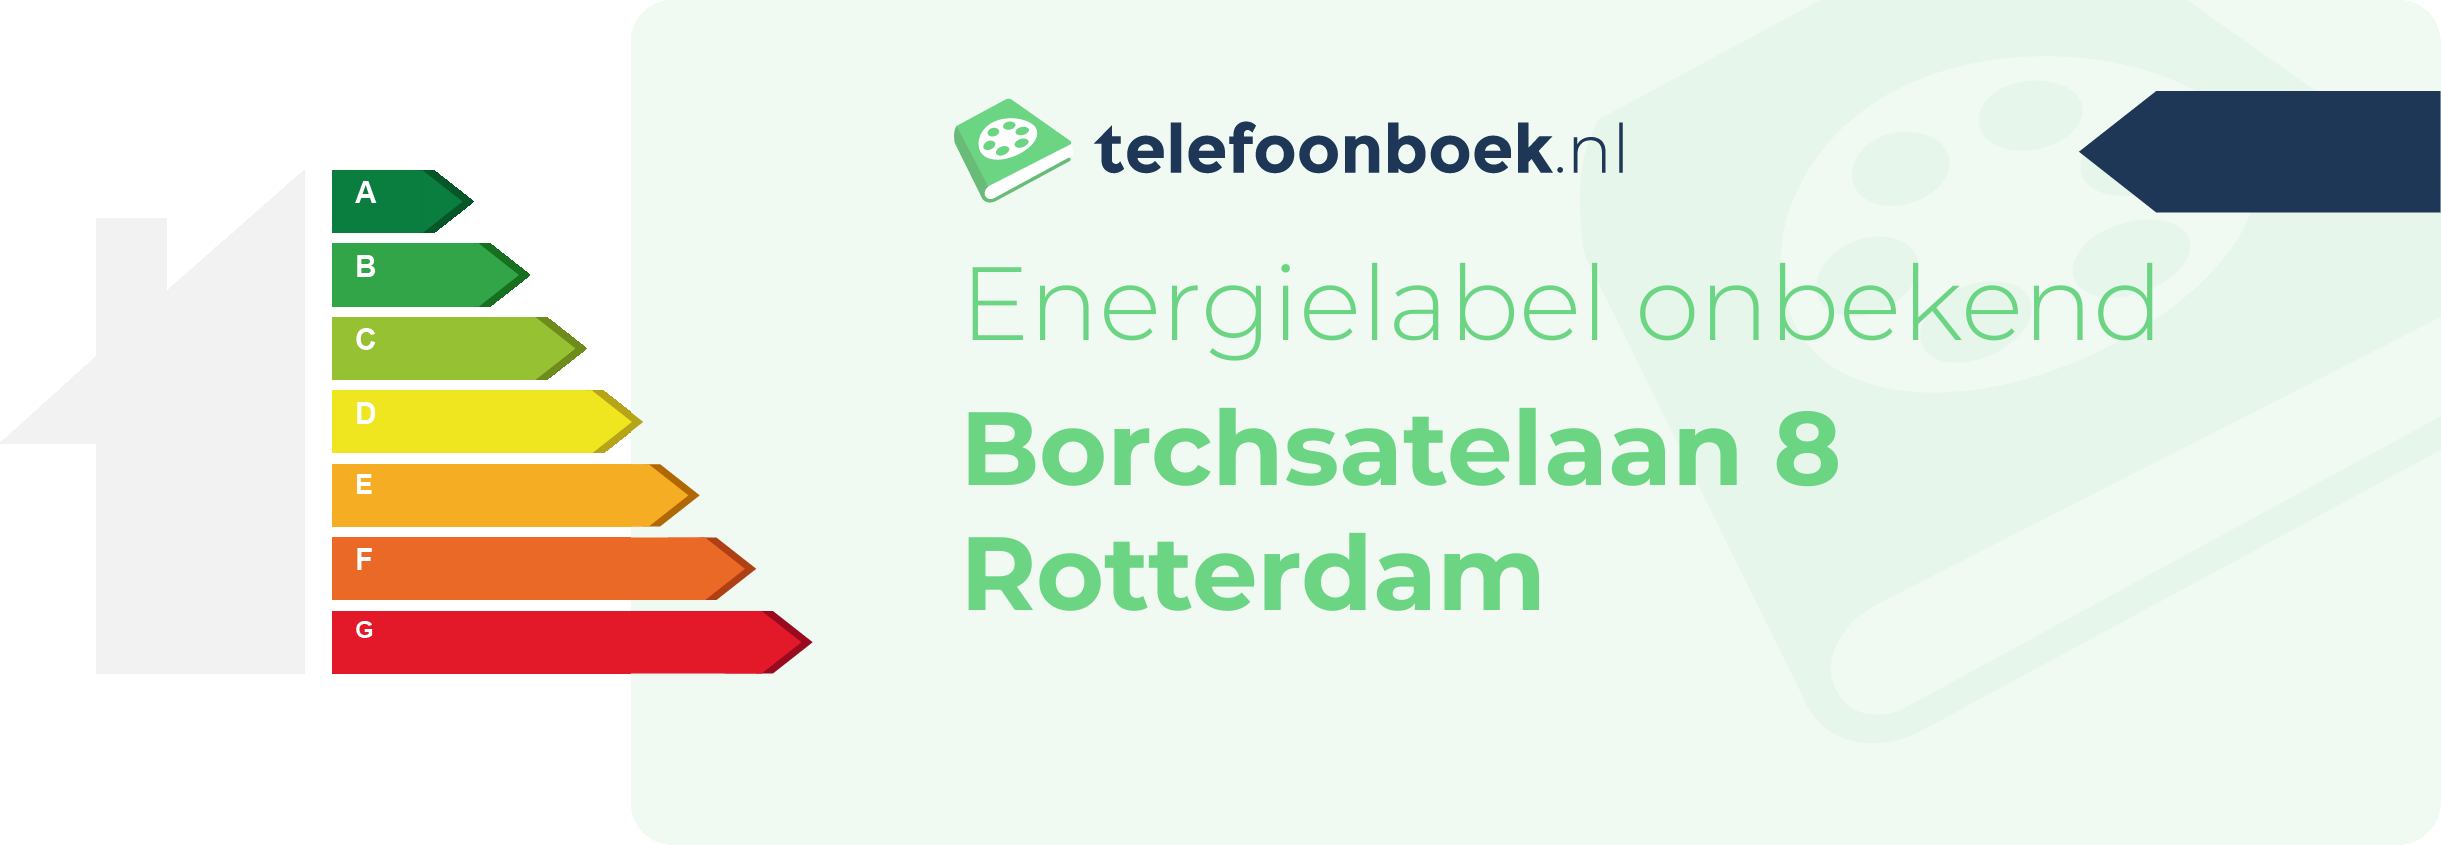 Energielabel Borchsatelaan 8 Rotterdam